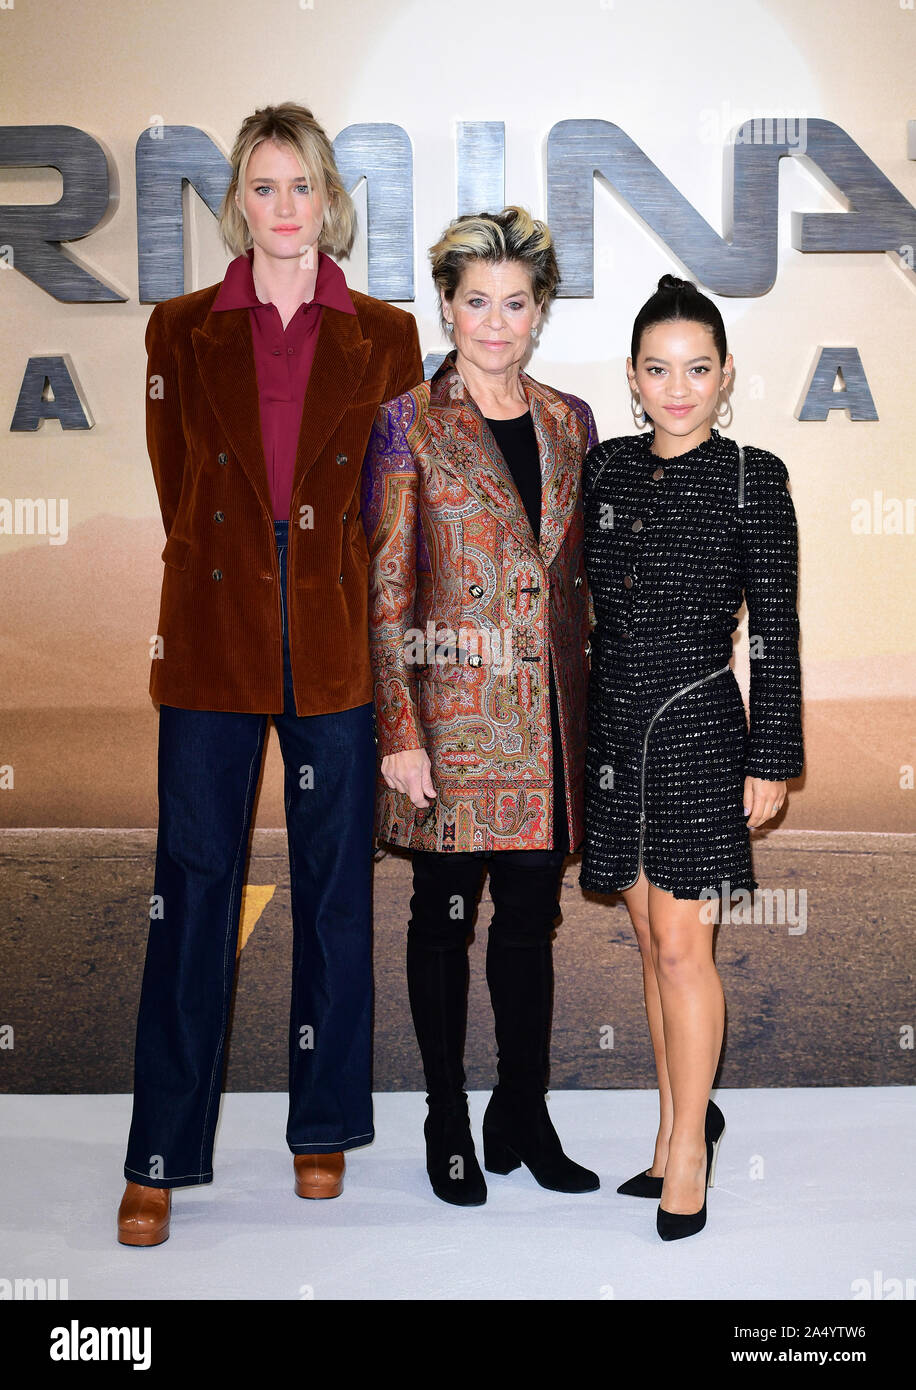 Mackenzie Davis Linda Hamilton And Natalia Reyes Arriving For The Terminator Dark Fate Photocall Held At The Mandarin Oriental Hotel London Stock Photo Alamy